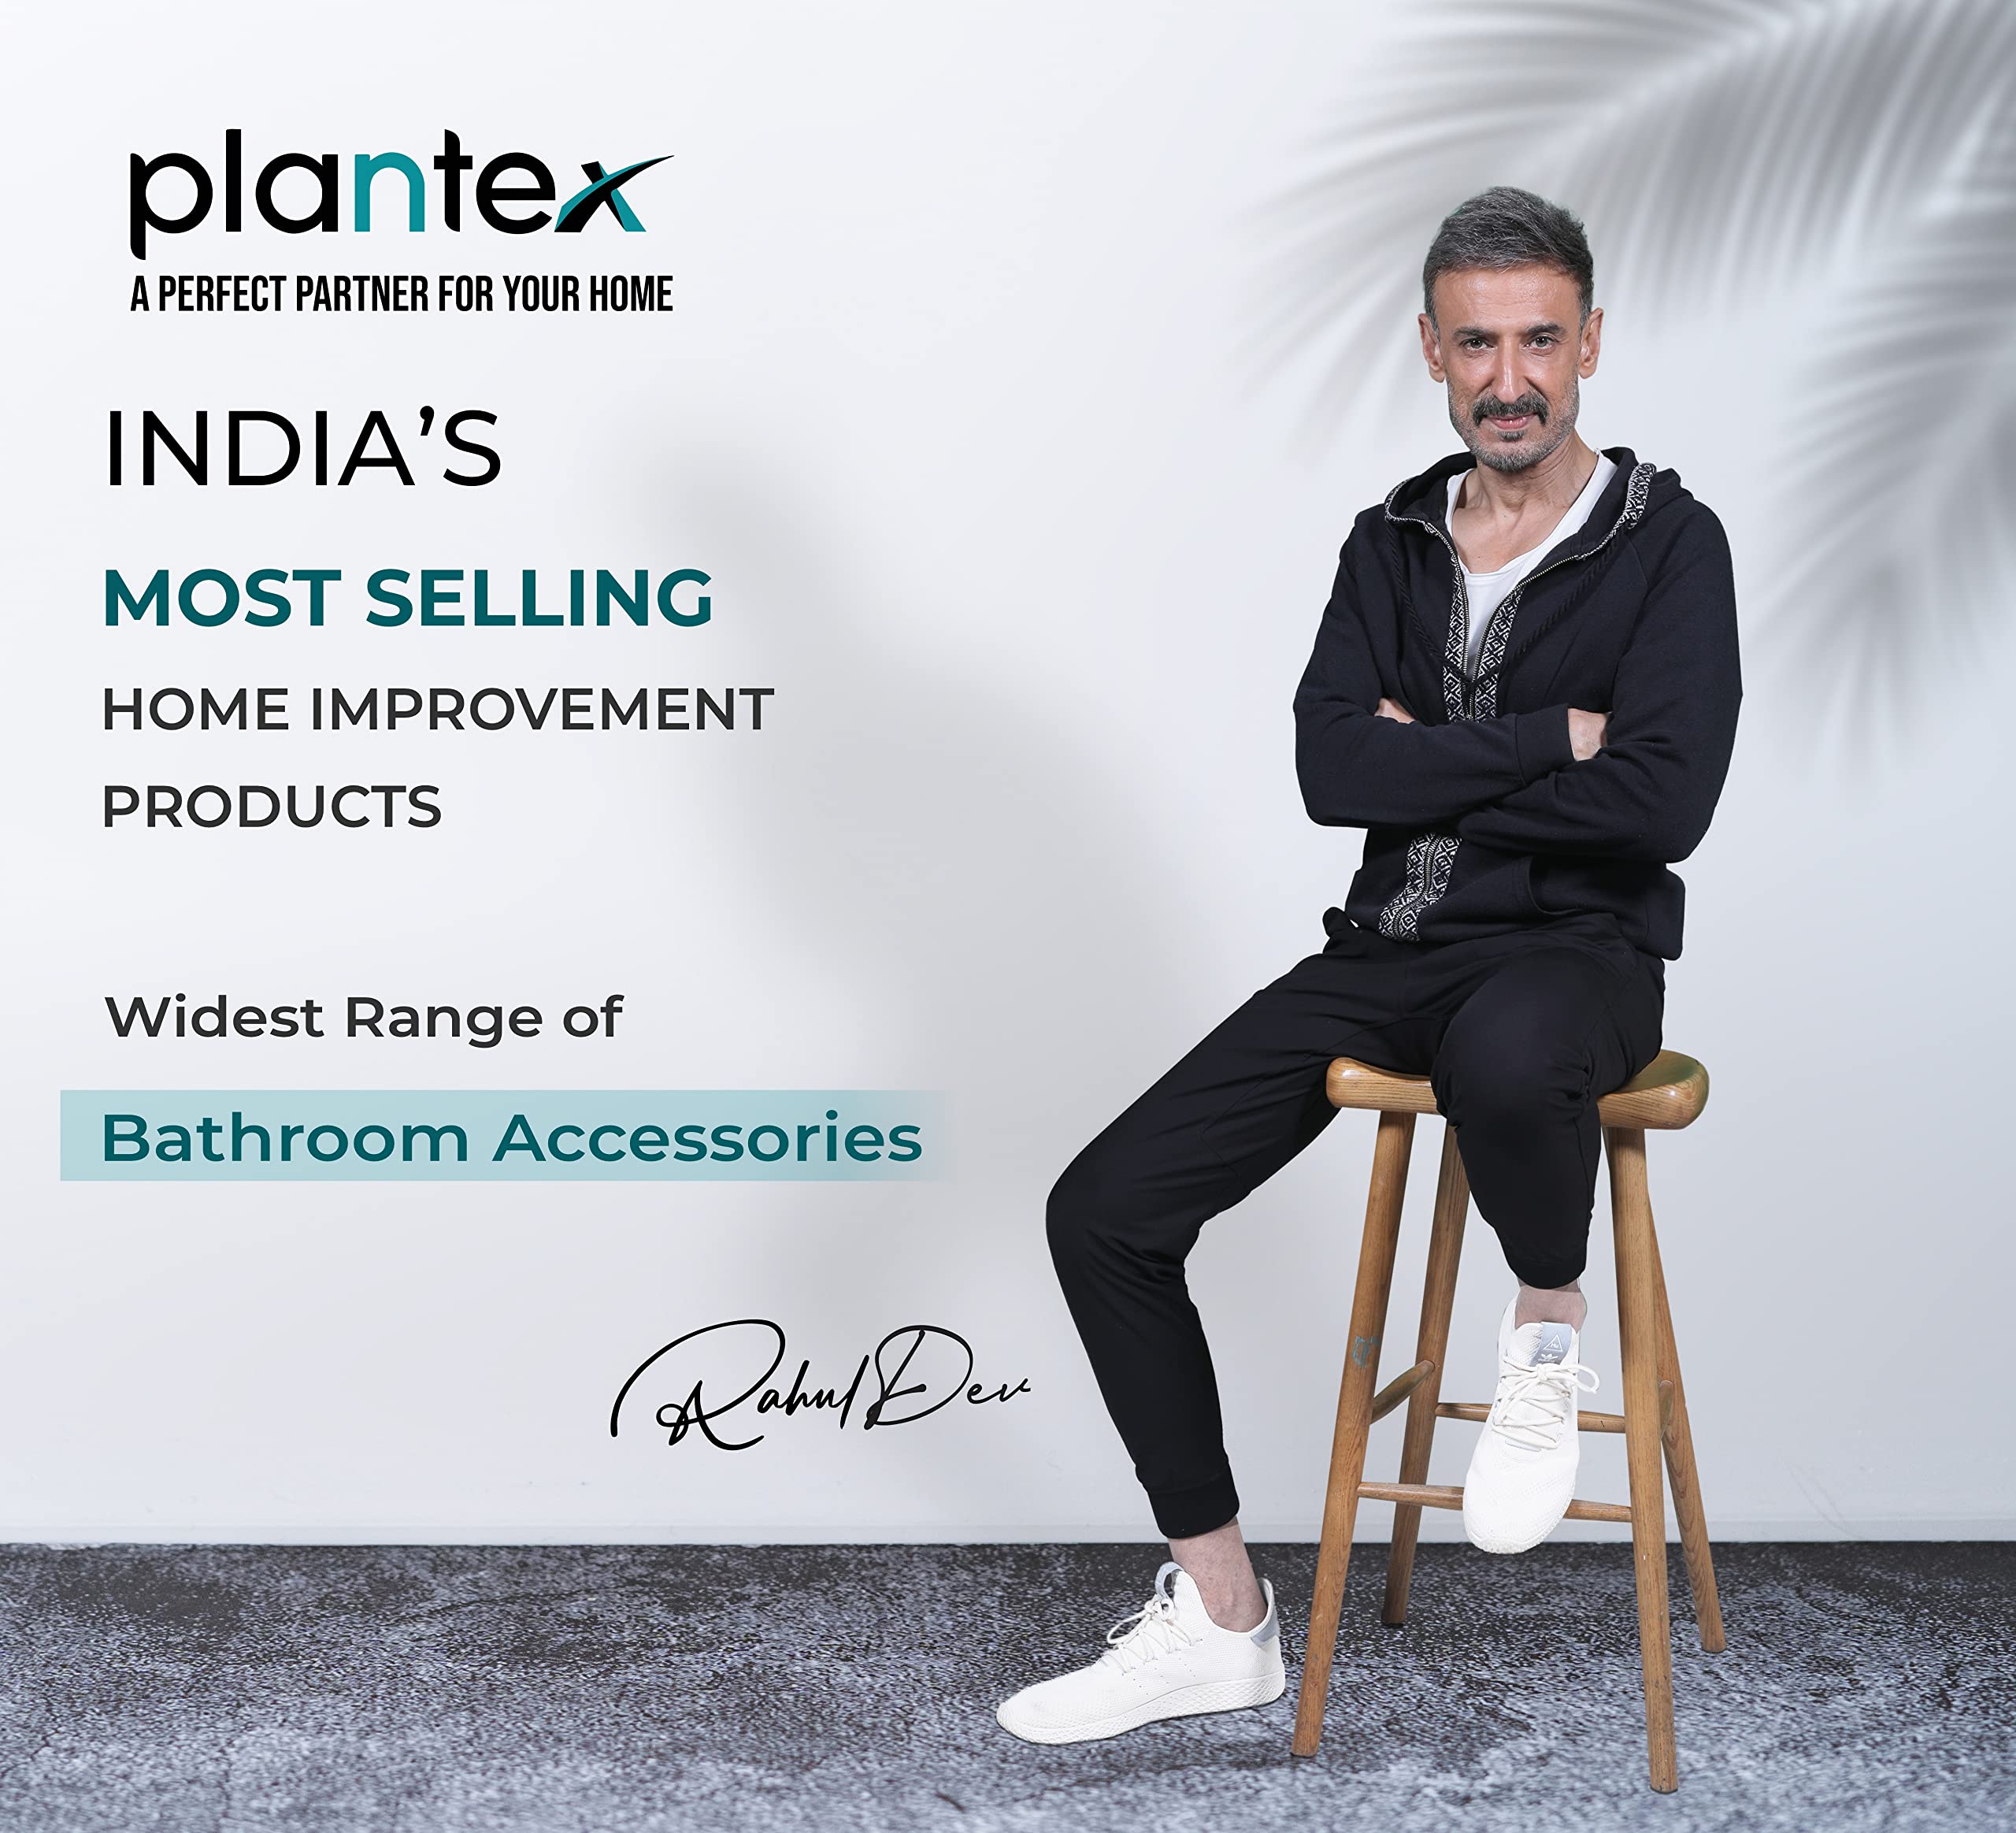 Plantex Stainless Steel Towel Hanger for Bathroom/Towel Rod/Bar/Bathroom Accessories (24 inch - Rose Gold & Black) - Pack of 1